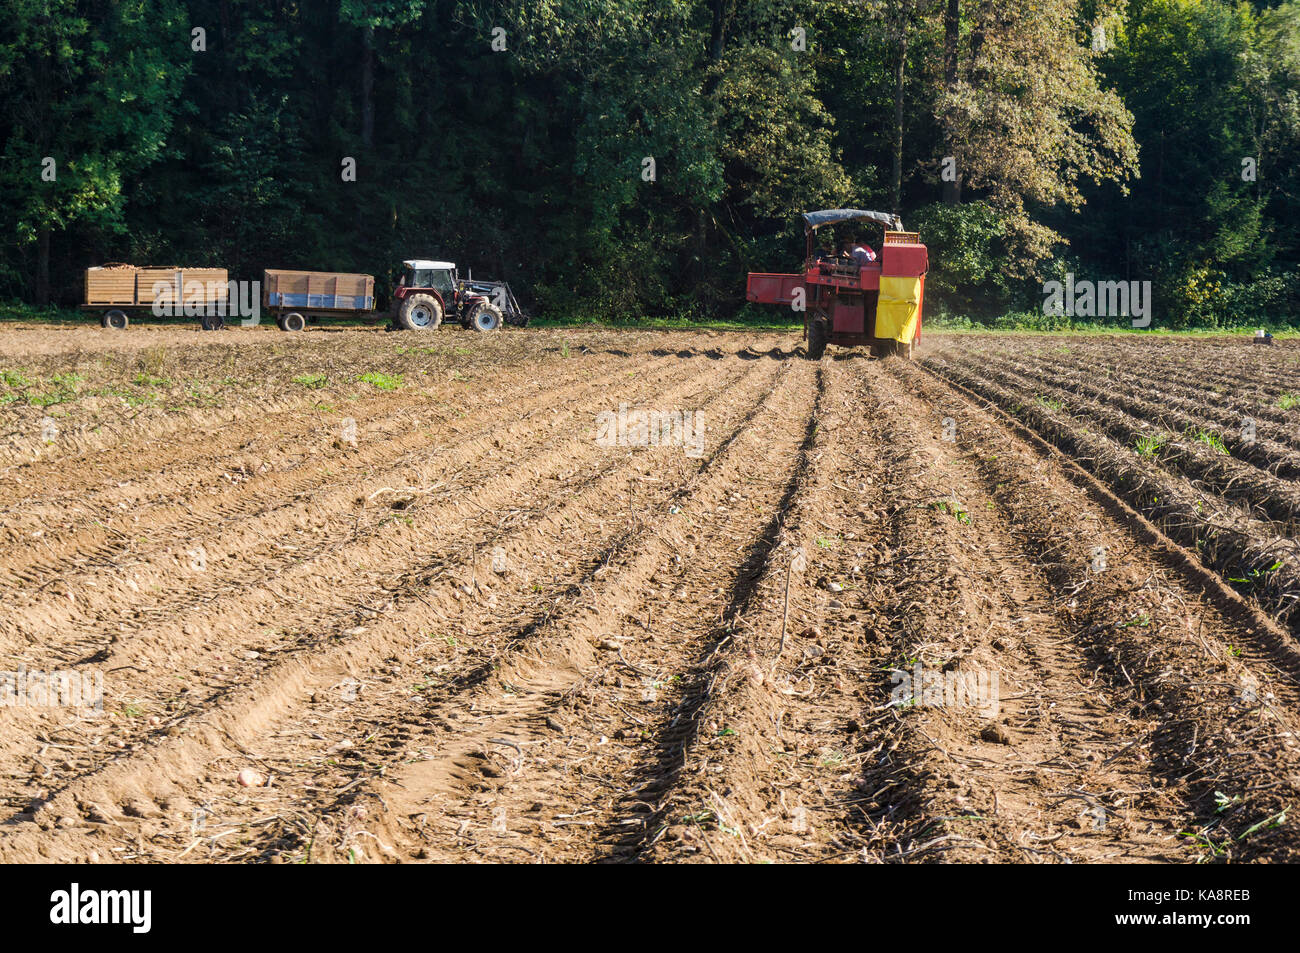 Potato harvester harvesting potatoes on field Stock Photo